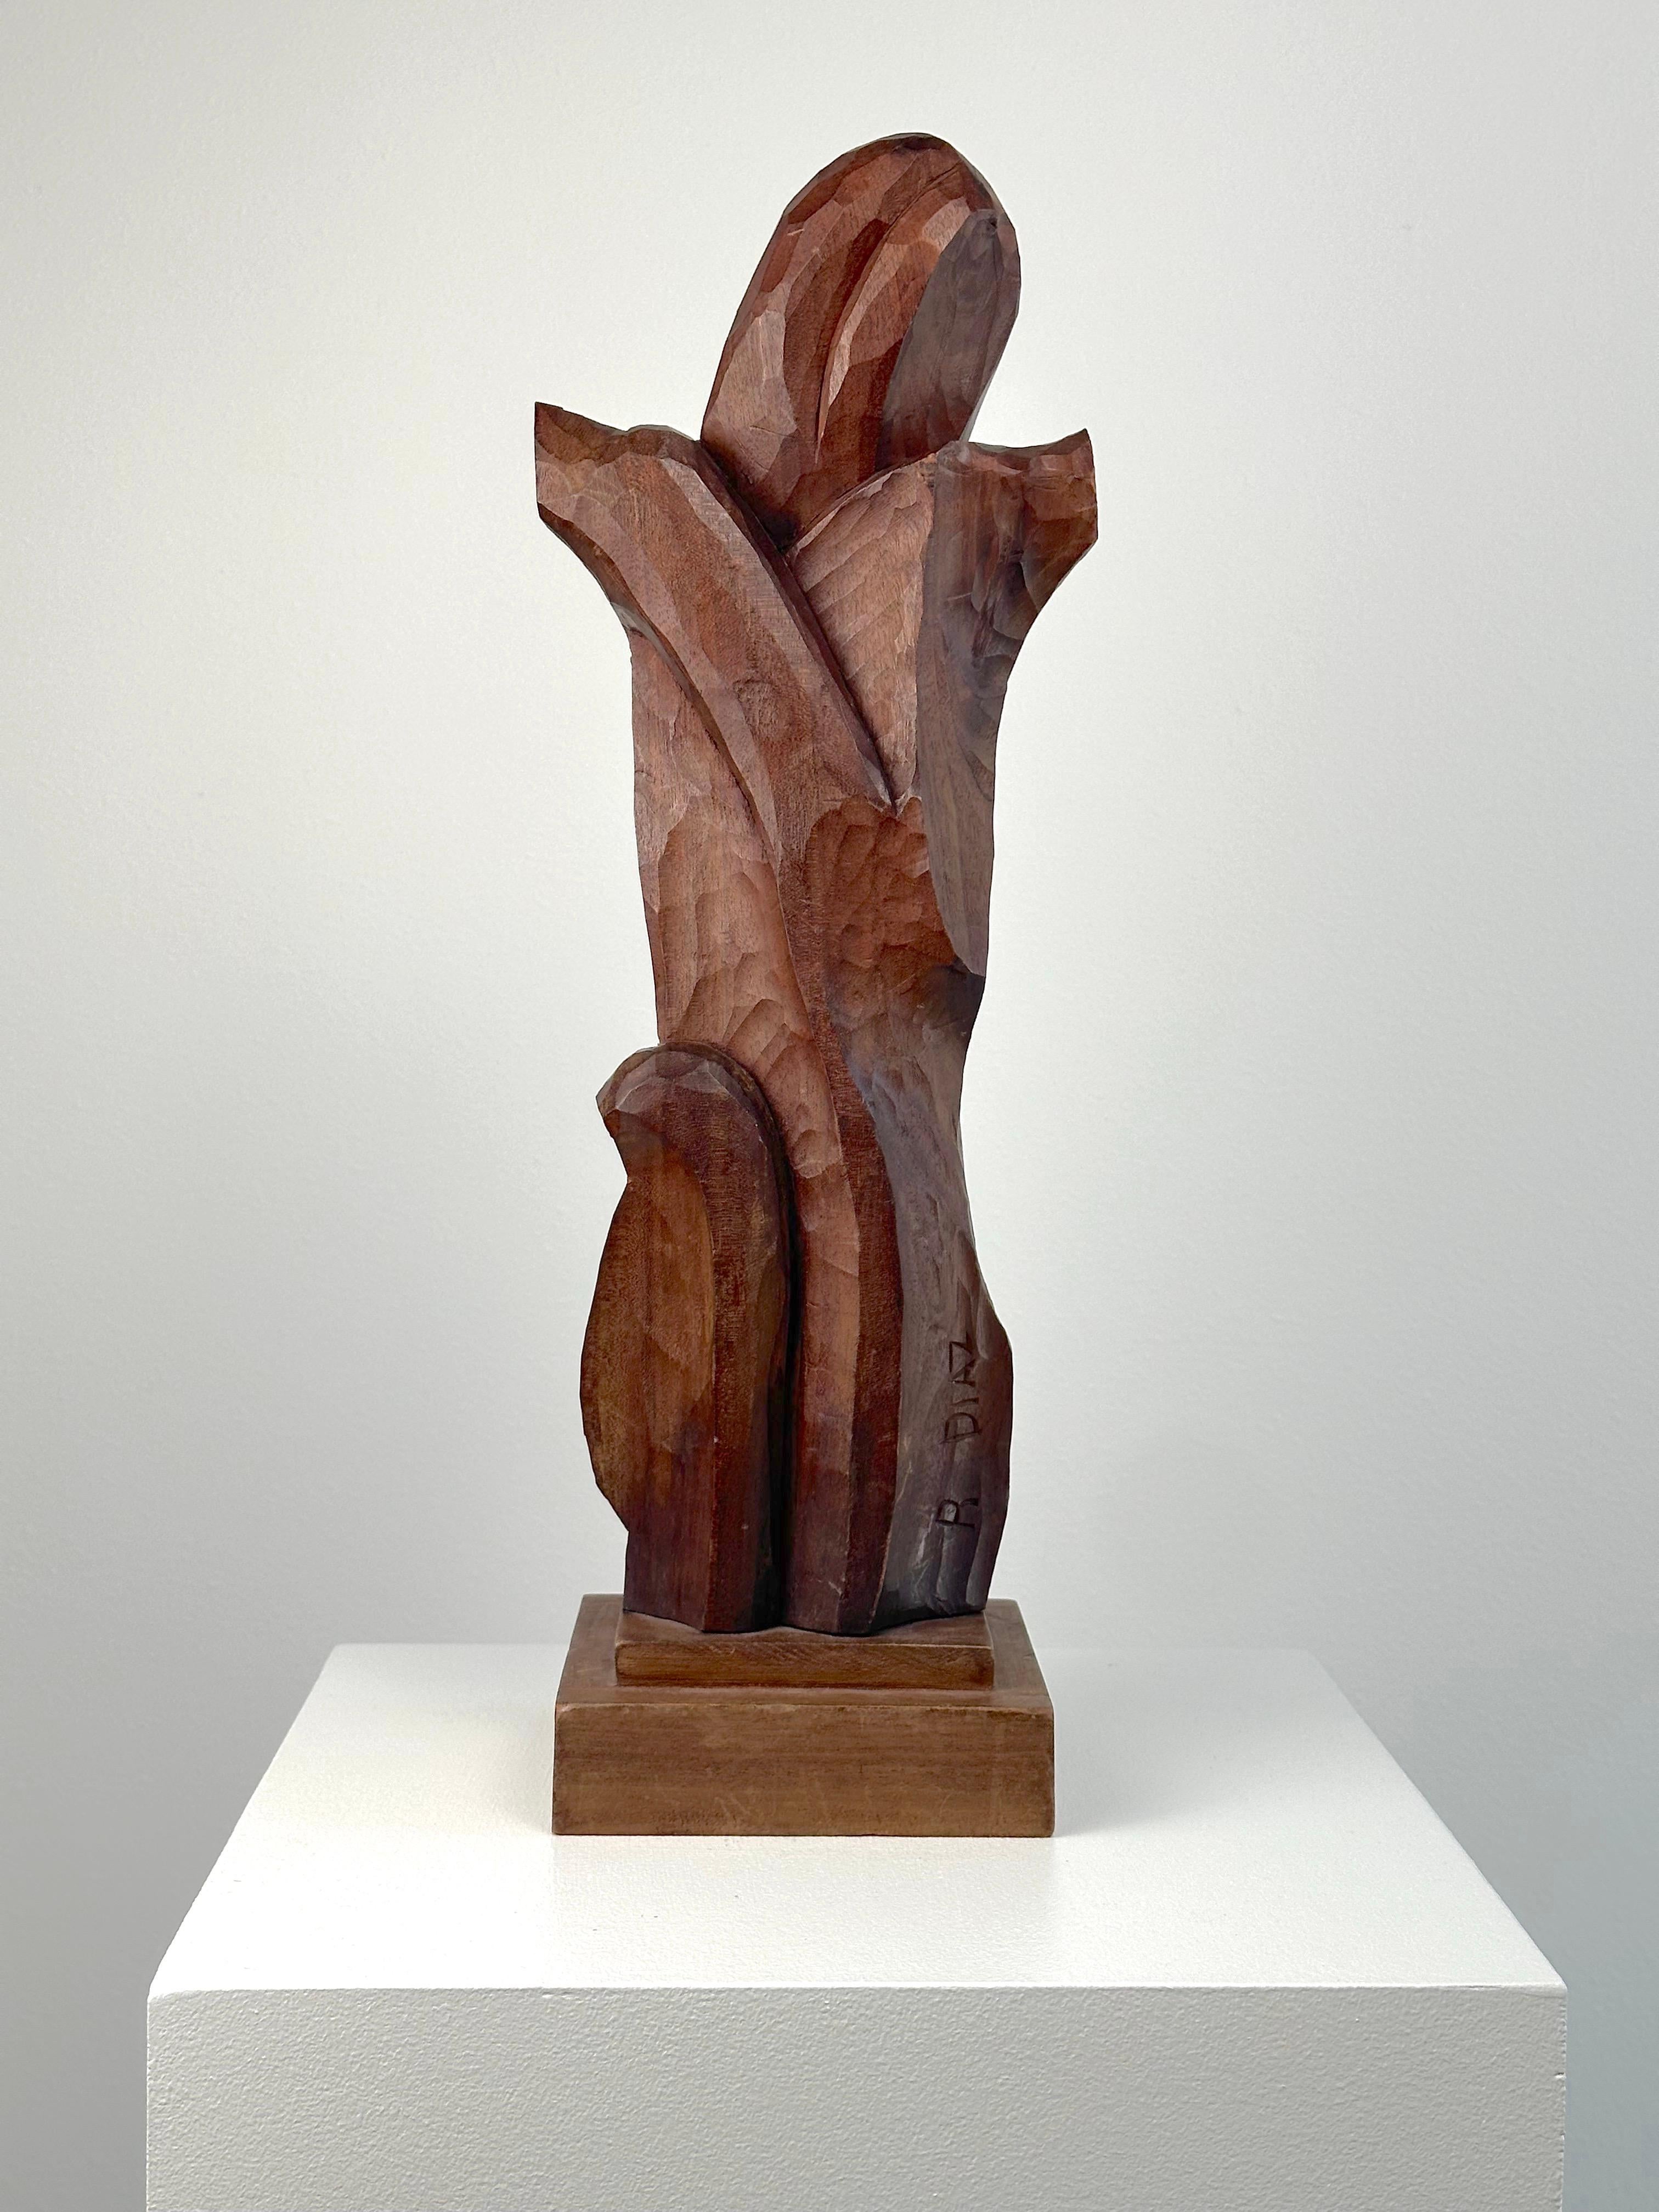 Raul Diaz Figurative Sculpture - Abstract Figure